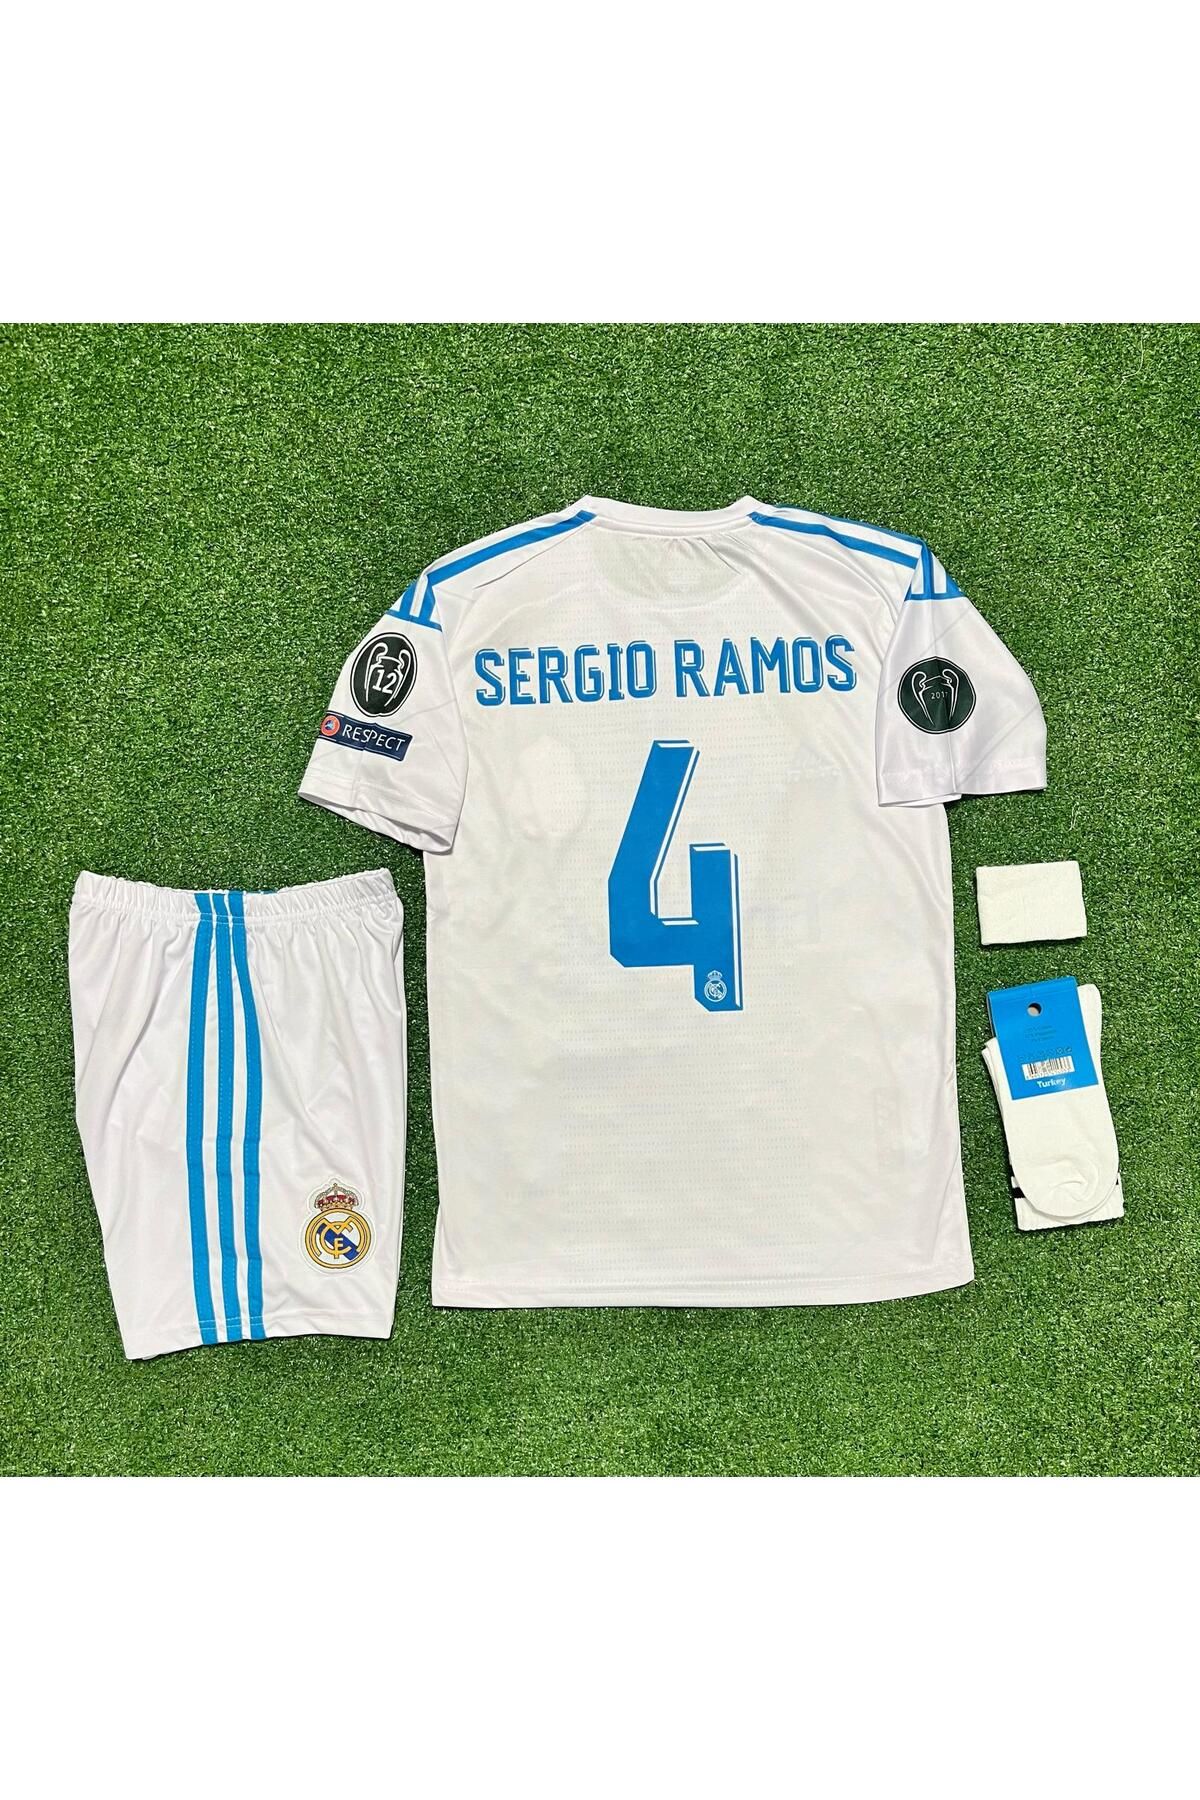 BYSPORTAKUS Real Madrid 2018 Finali Sergio Ramos Çocuk Forması Şort Çorap Bileklik 4'lü Set